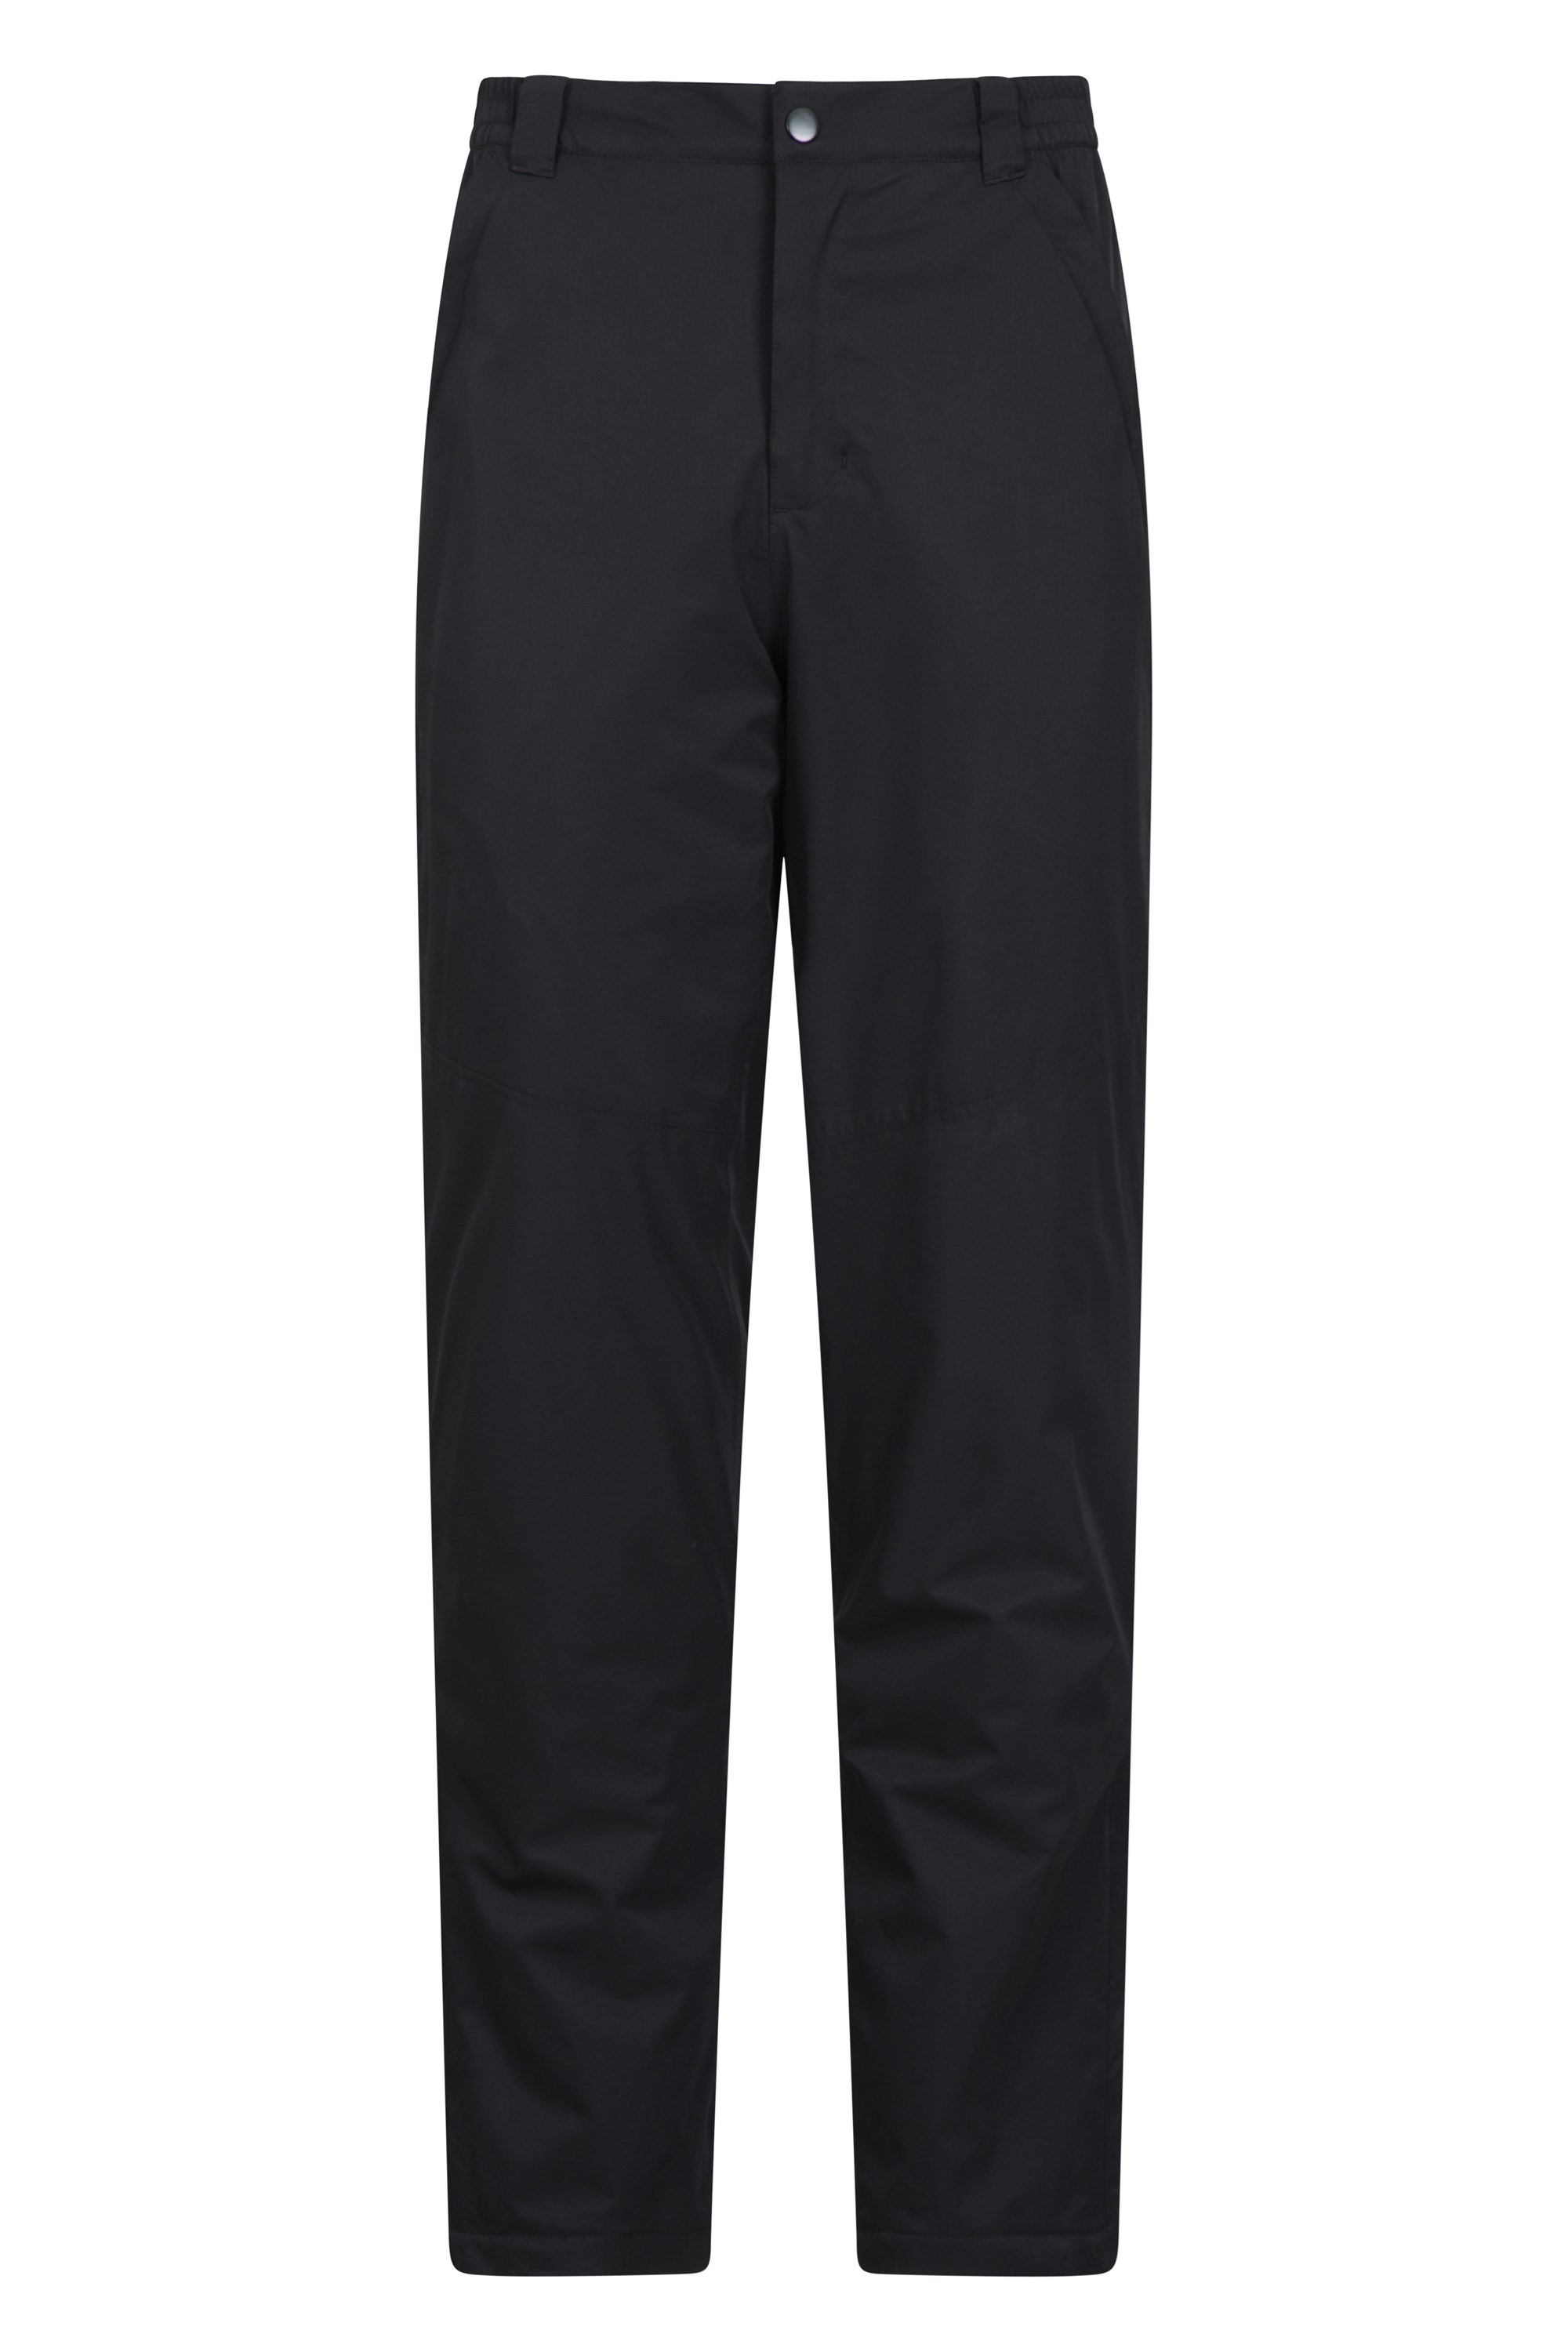 Terrain Mens Insulated Trousers - Short Length - Black